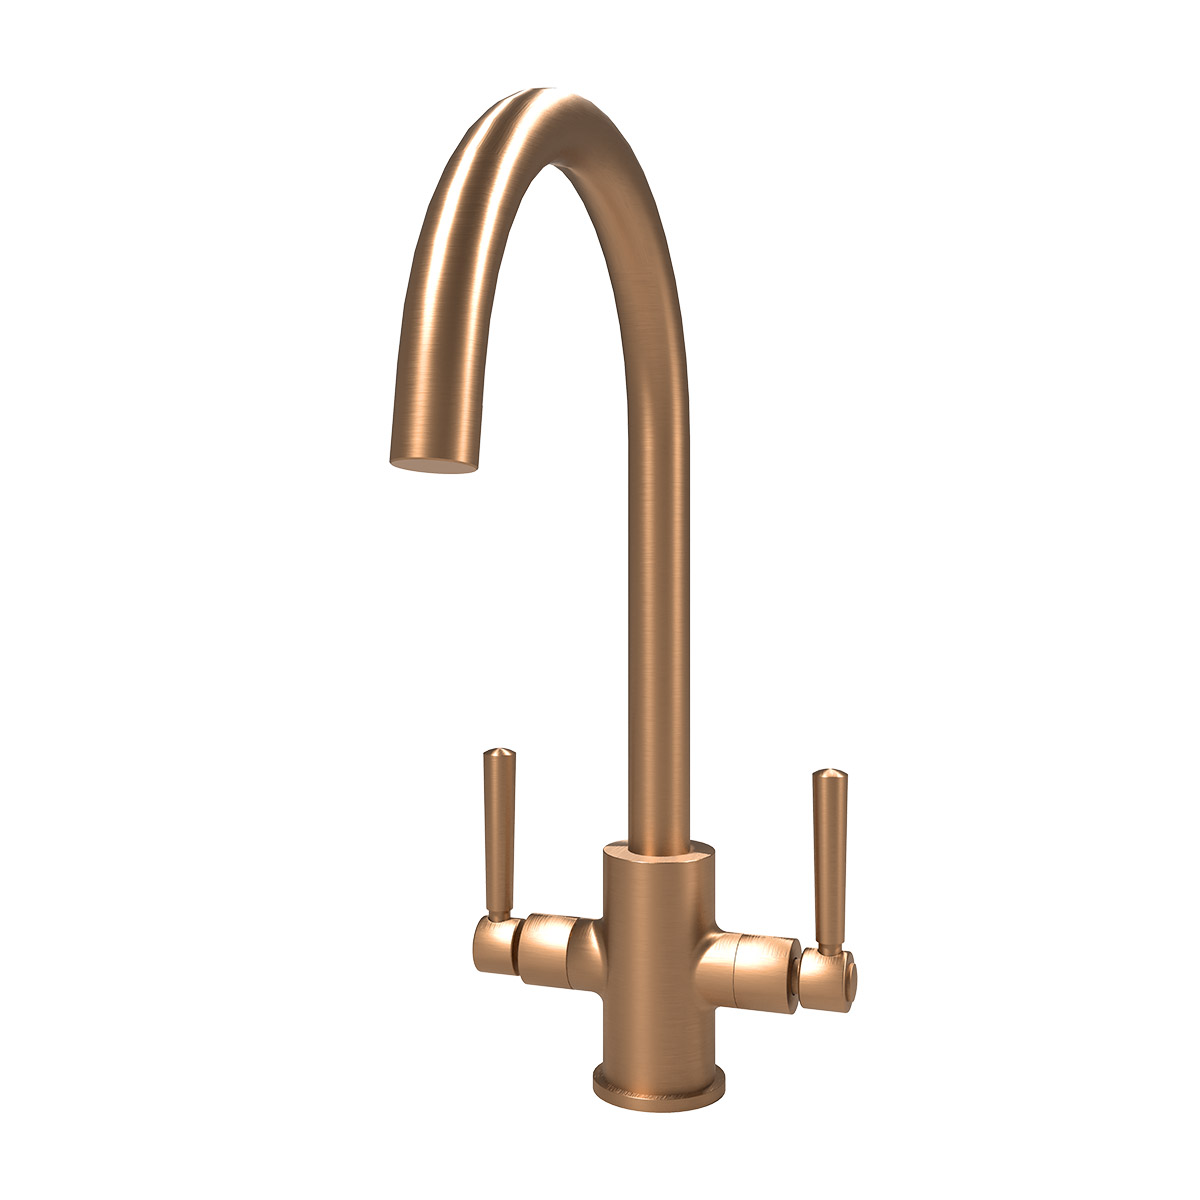 Noa dual lever kitchen tap in copper